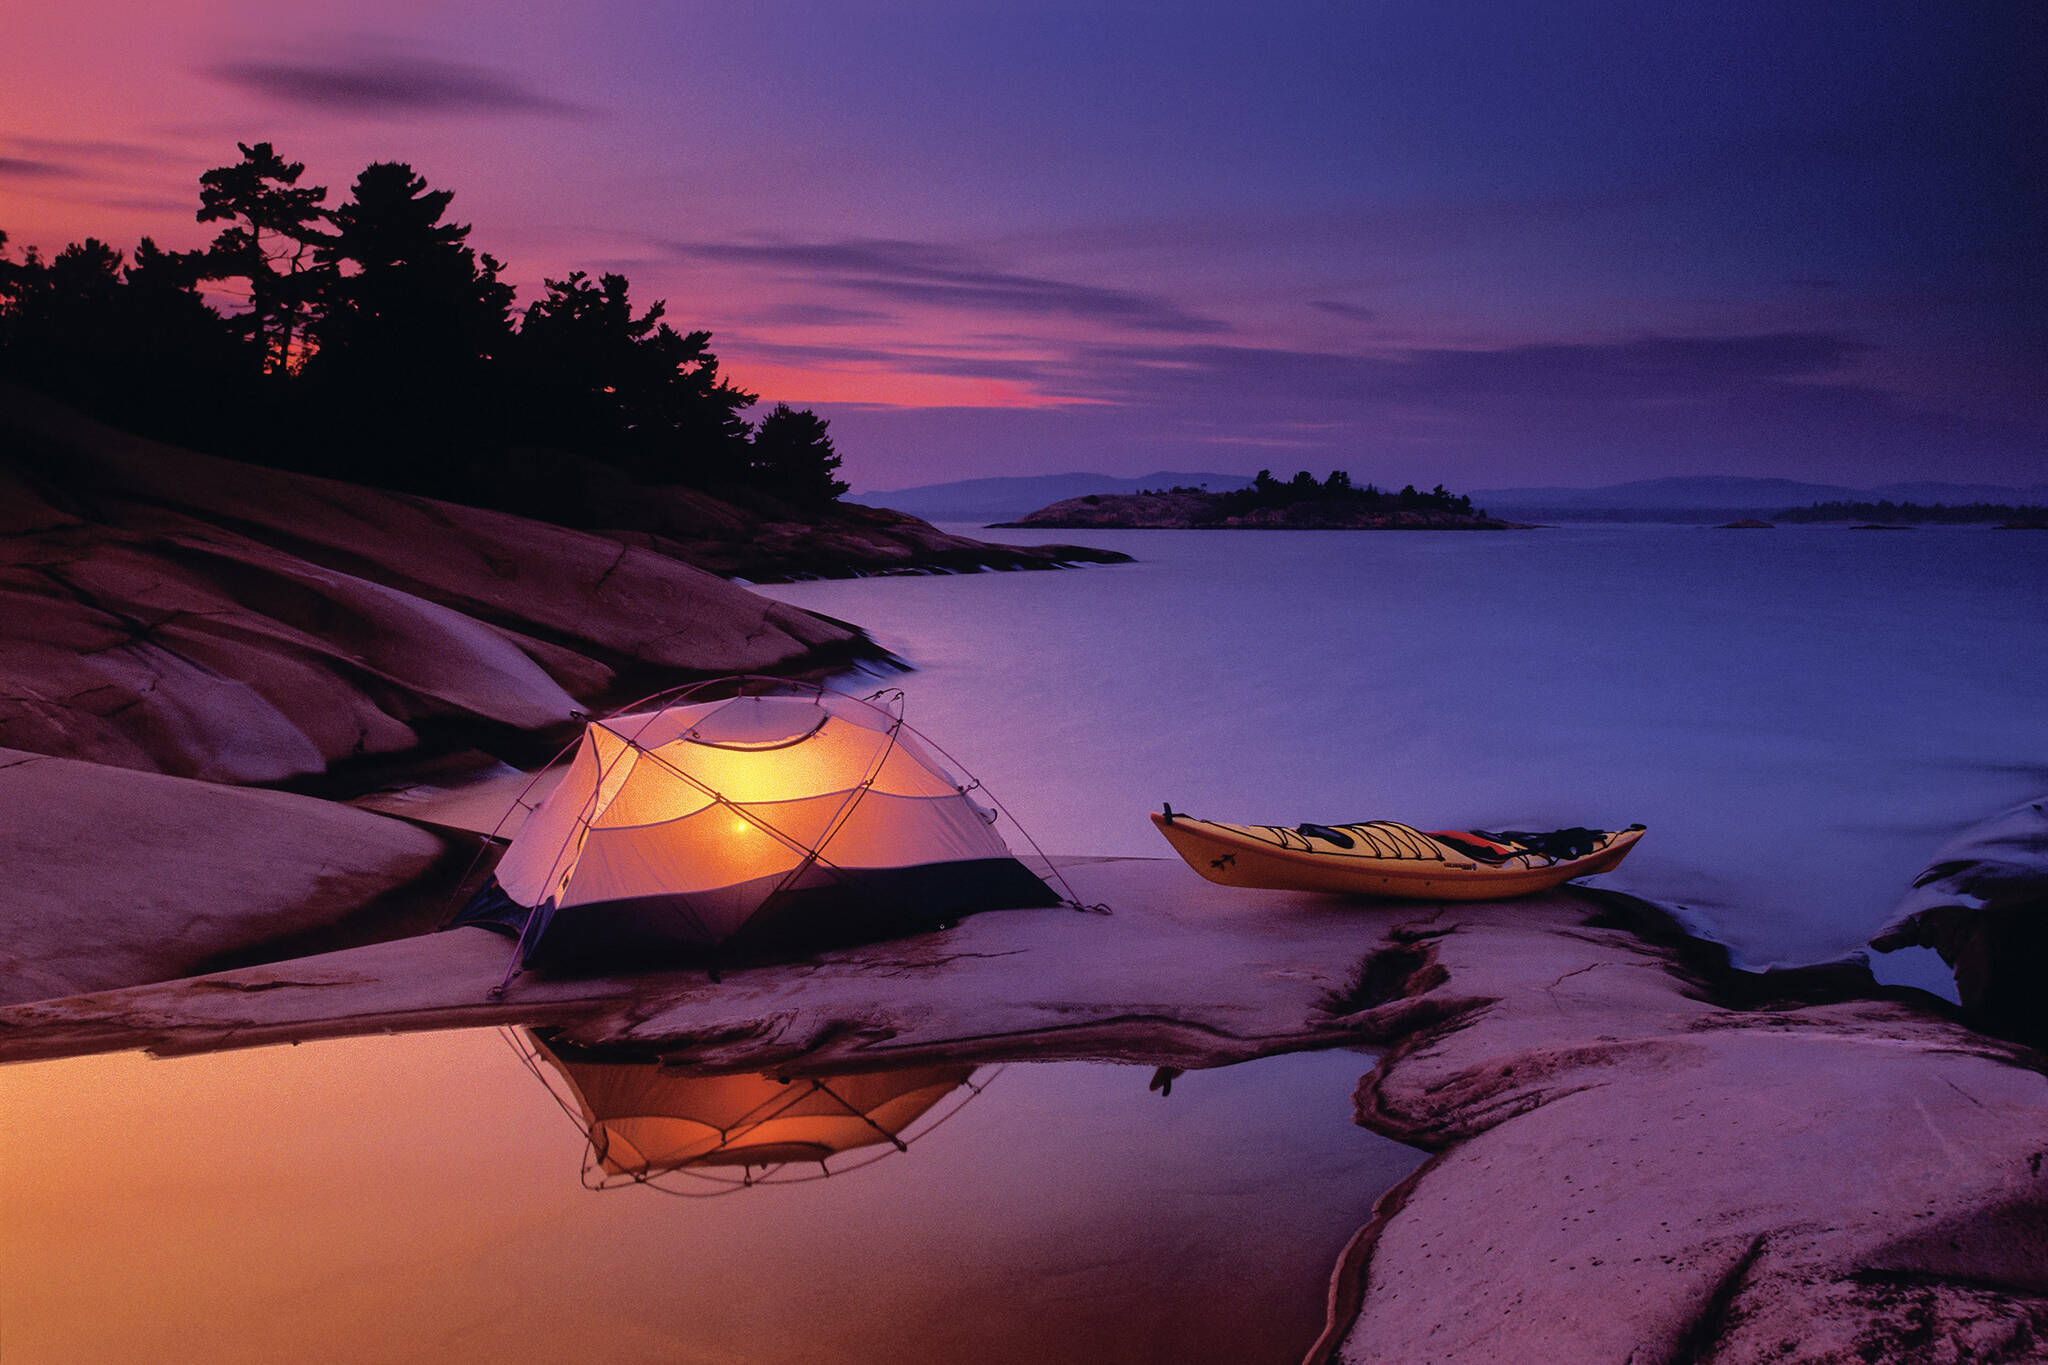 The 10 most beautiful campsites in Ontario